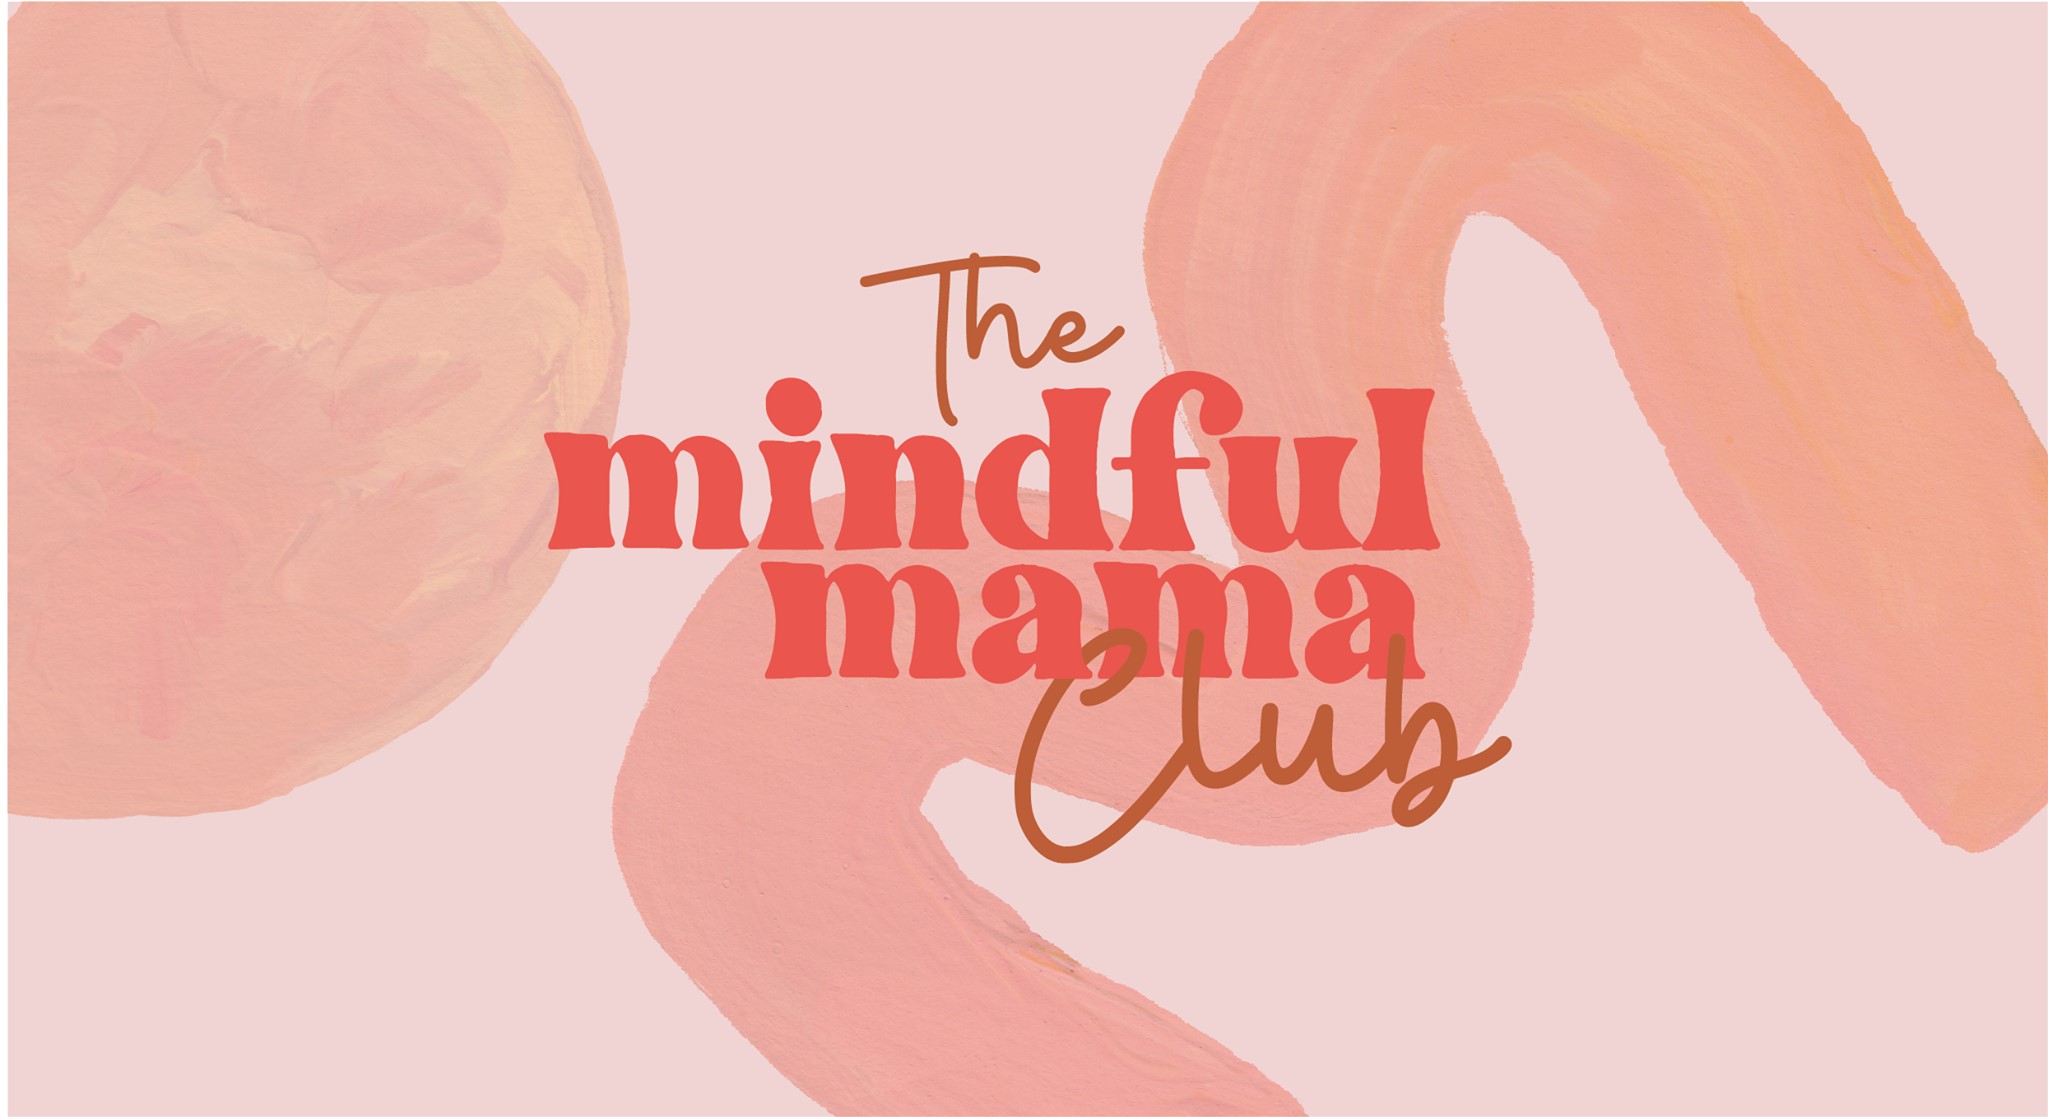 Mindful Mama Club's logo